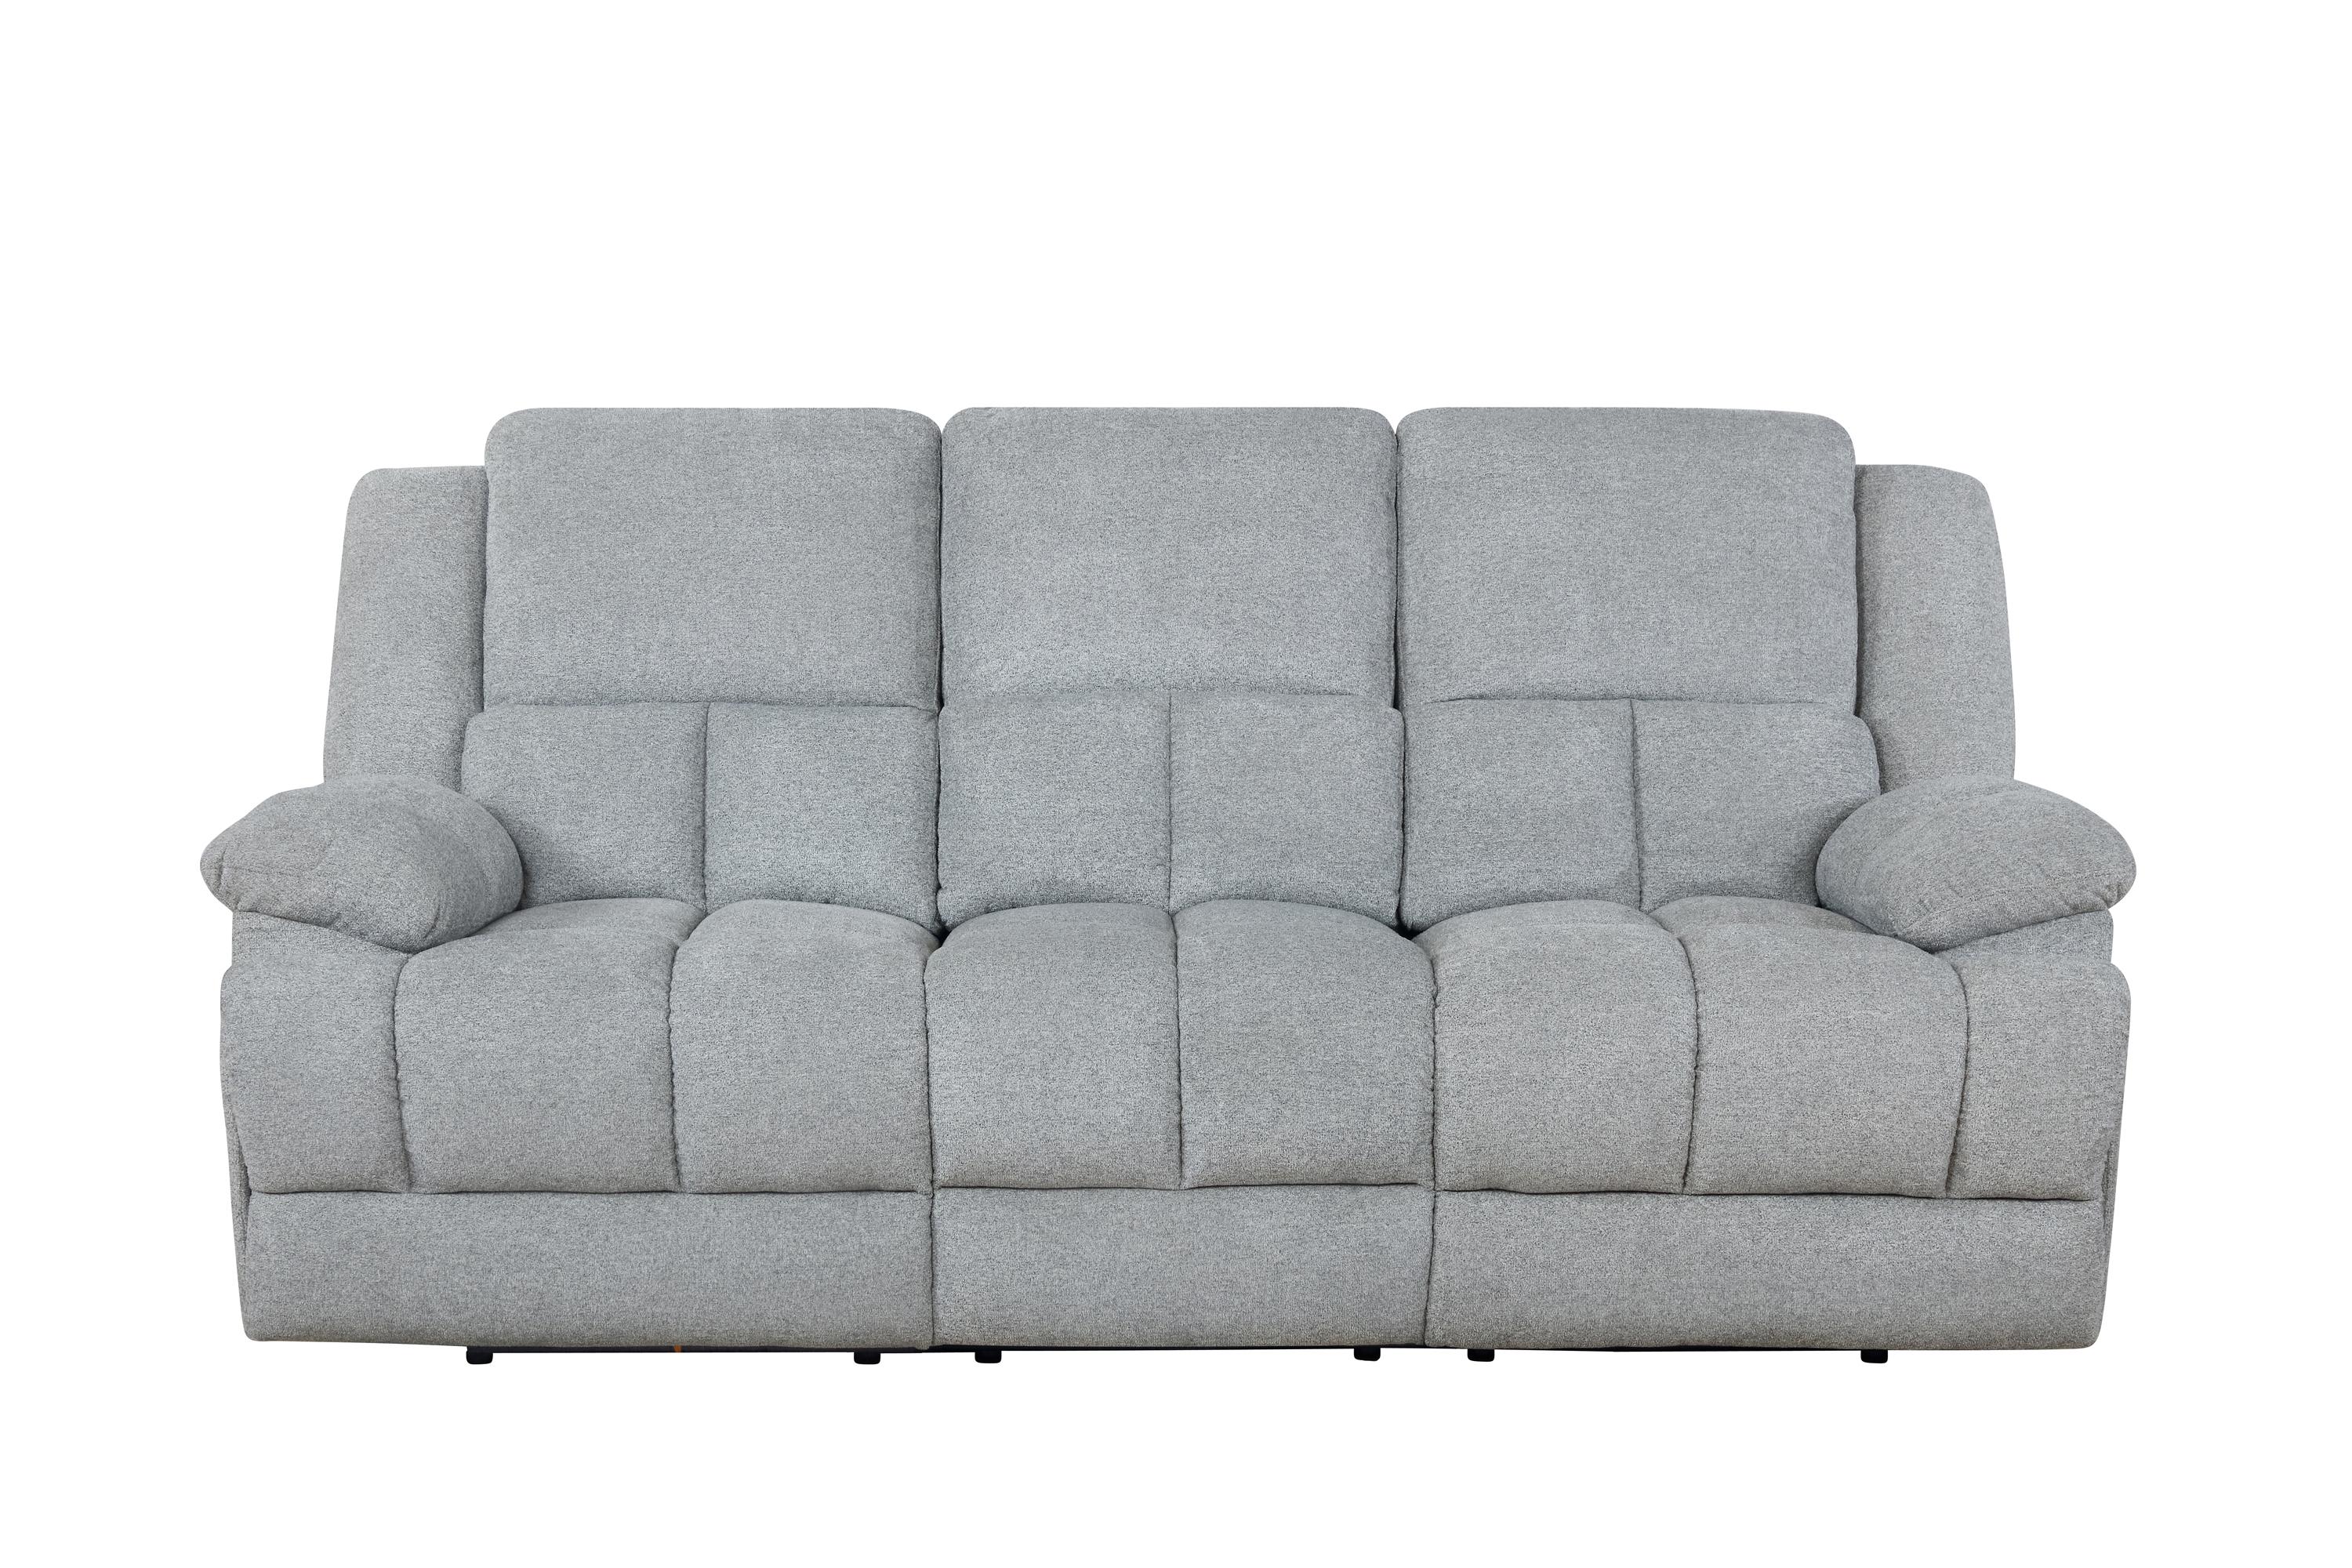 Modern Power sofa 602561P Waterbury 602561P in Gray 